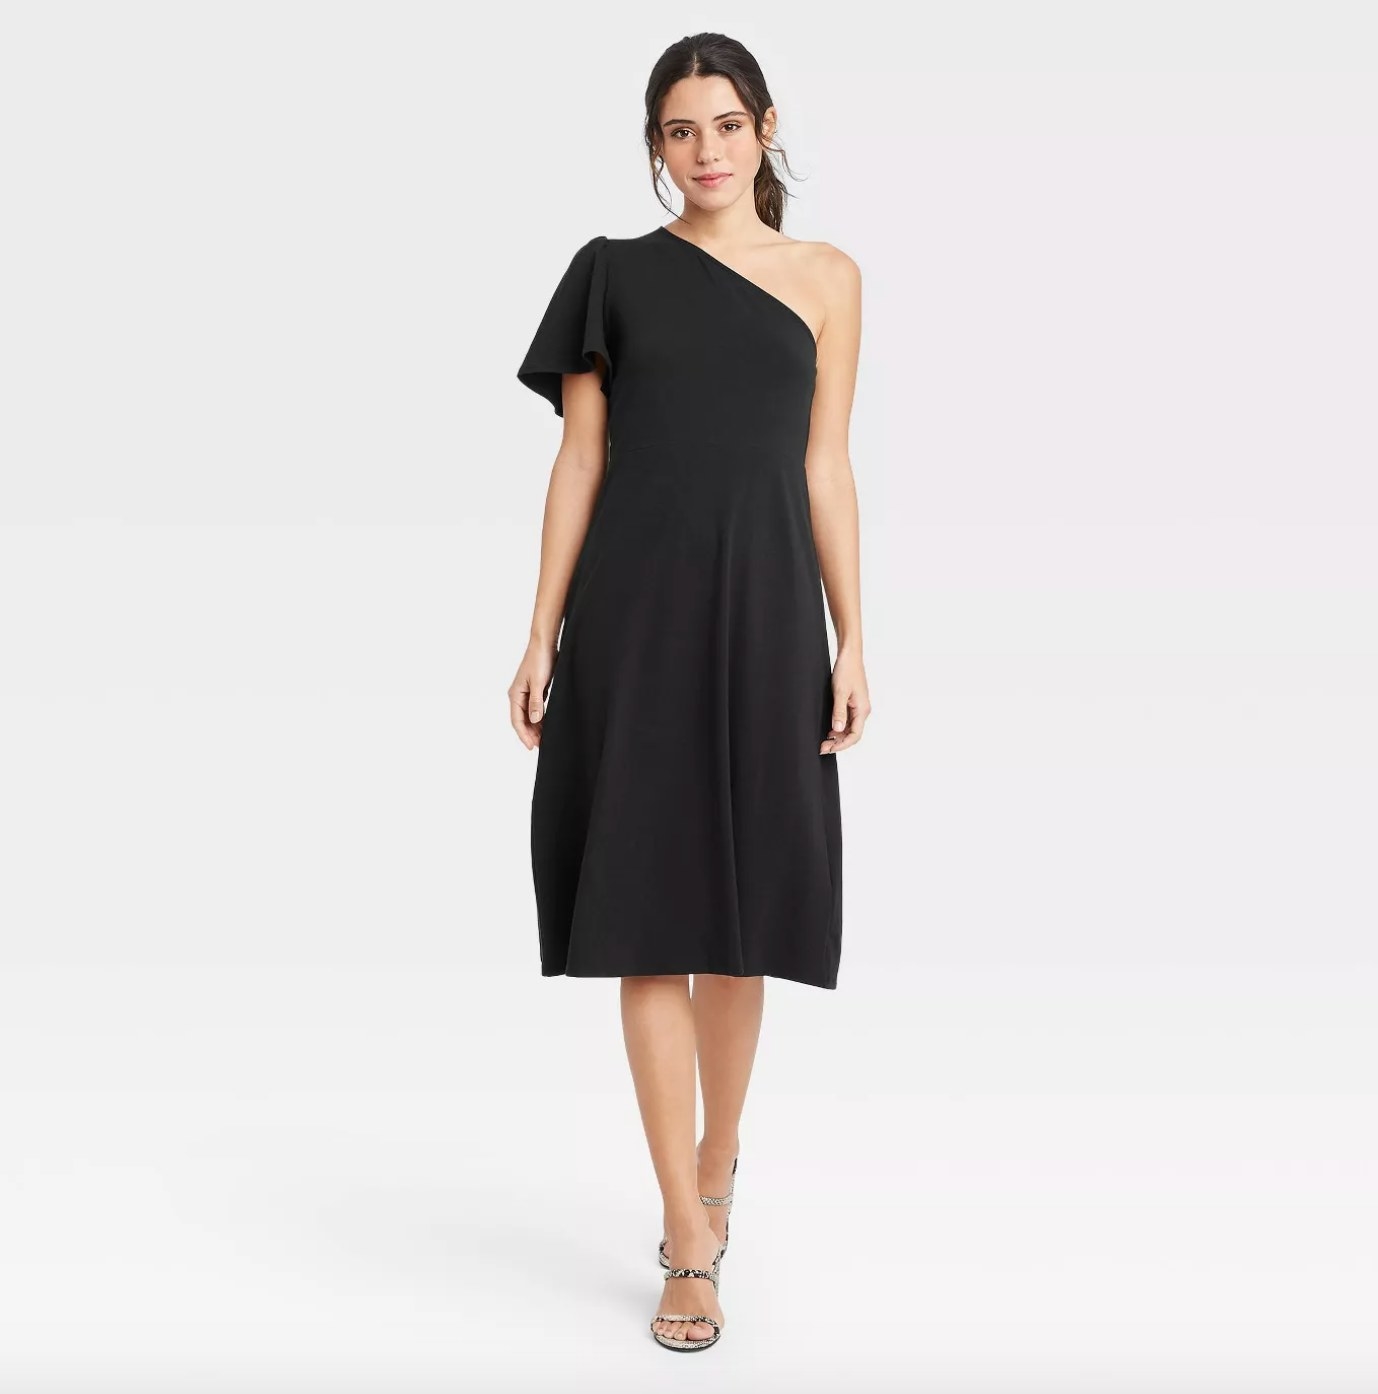 The stylish one-shoulder black dress